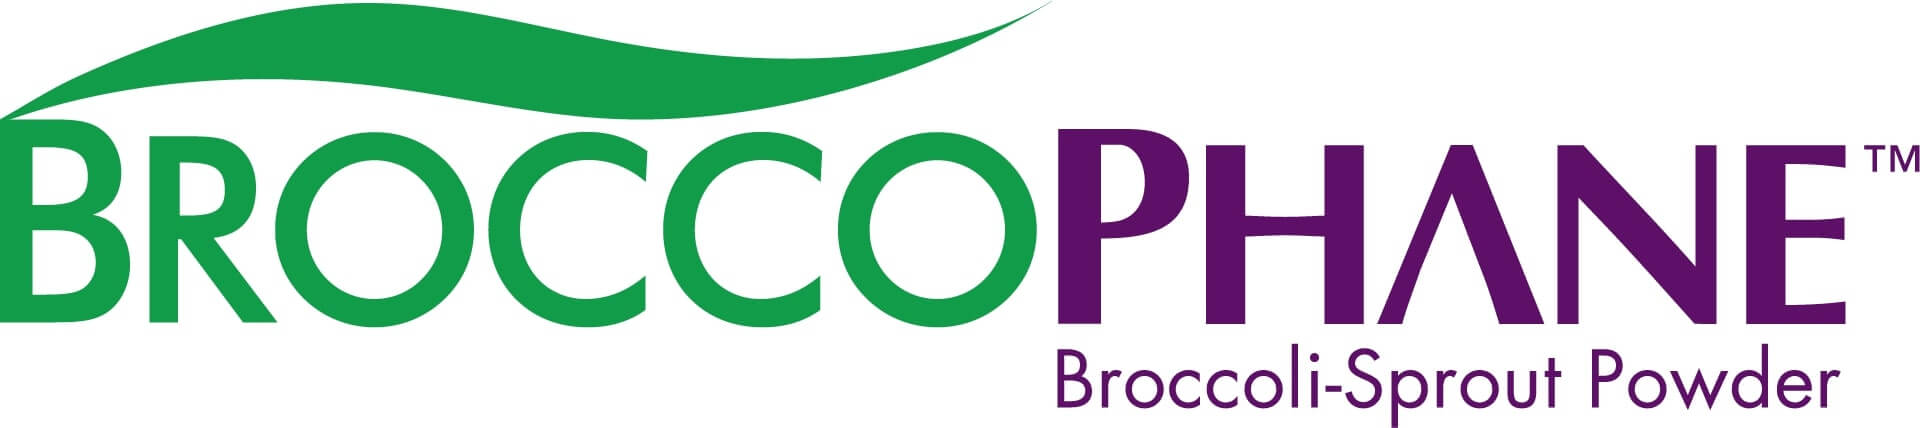 BroccoPhane logo